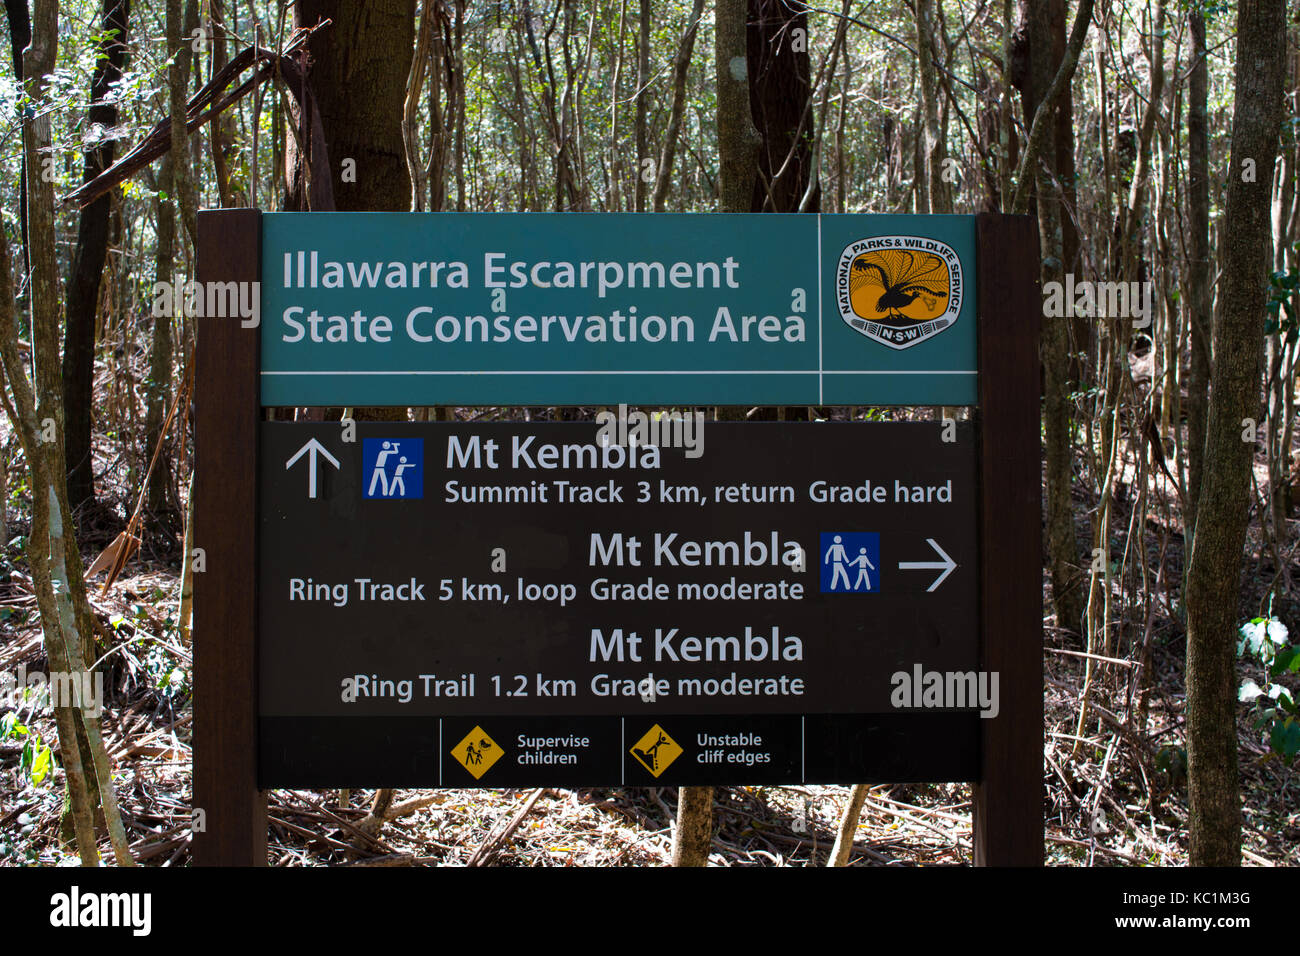 Illawarra escarpments Zustand Conservation Area Informationen Verzeichnis, Mt kembla New South Wales in Australien. Stockfoto